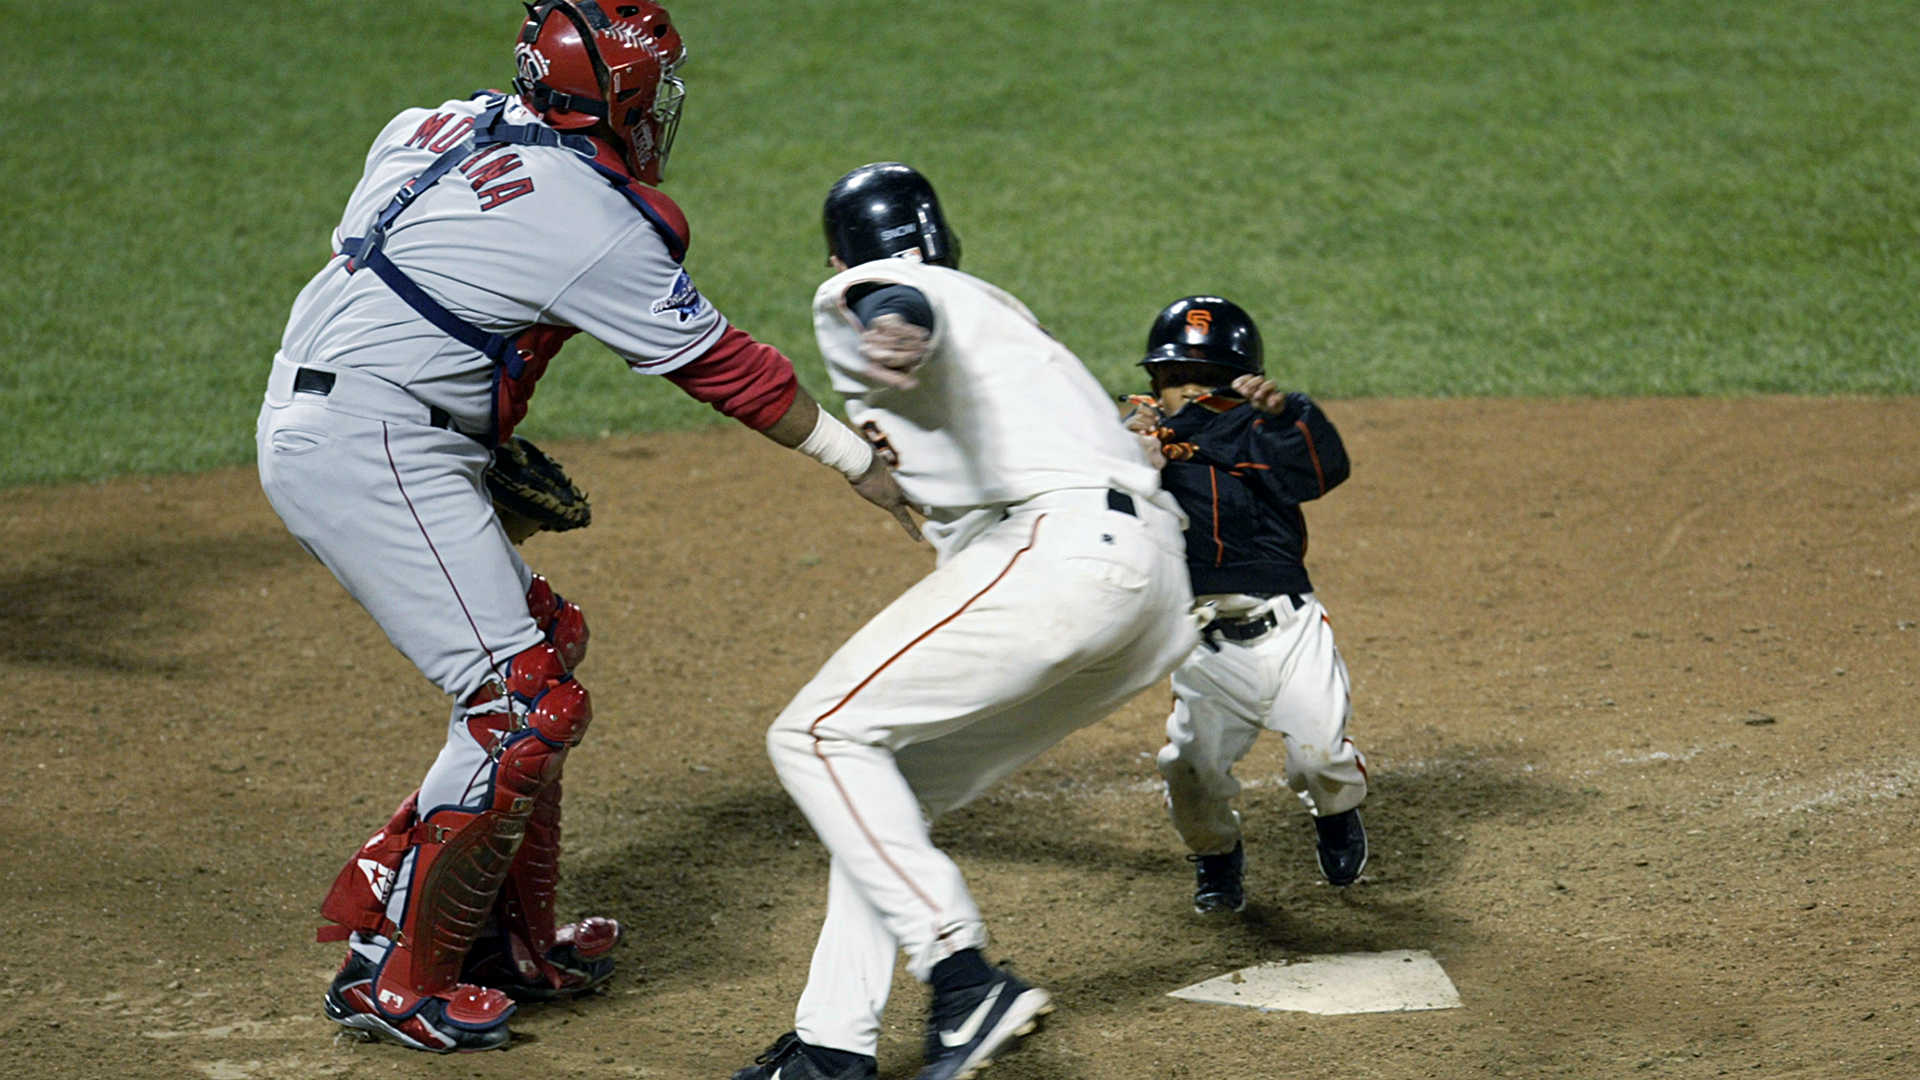 J.T. Snow, Darren Baker reminisce about famous 2002 World Series scene | Sporting News ...